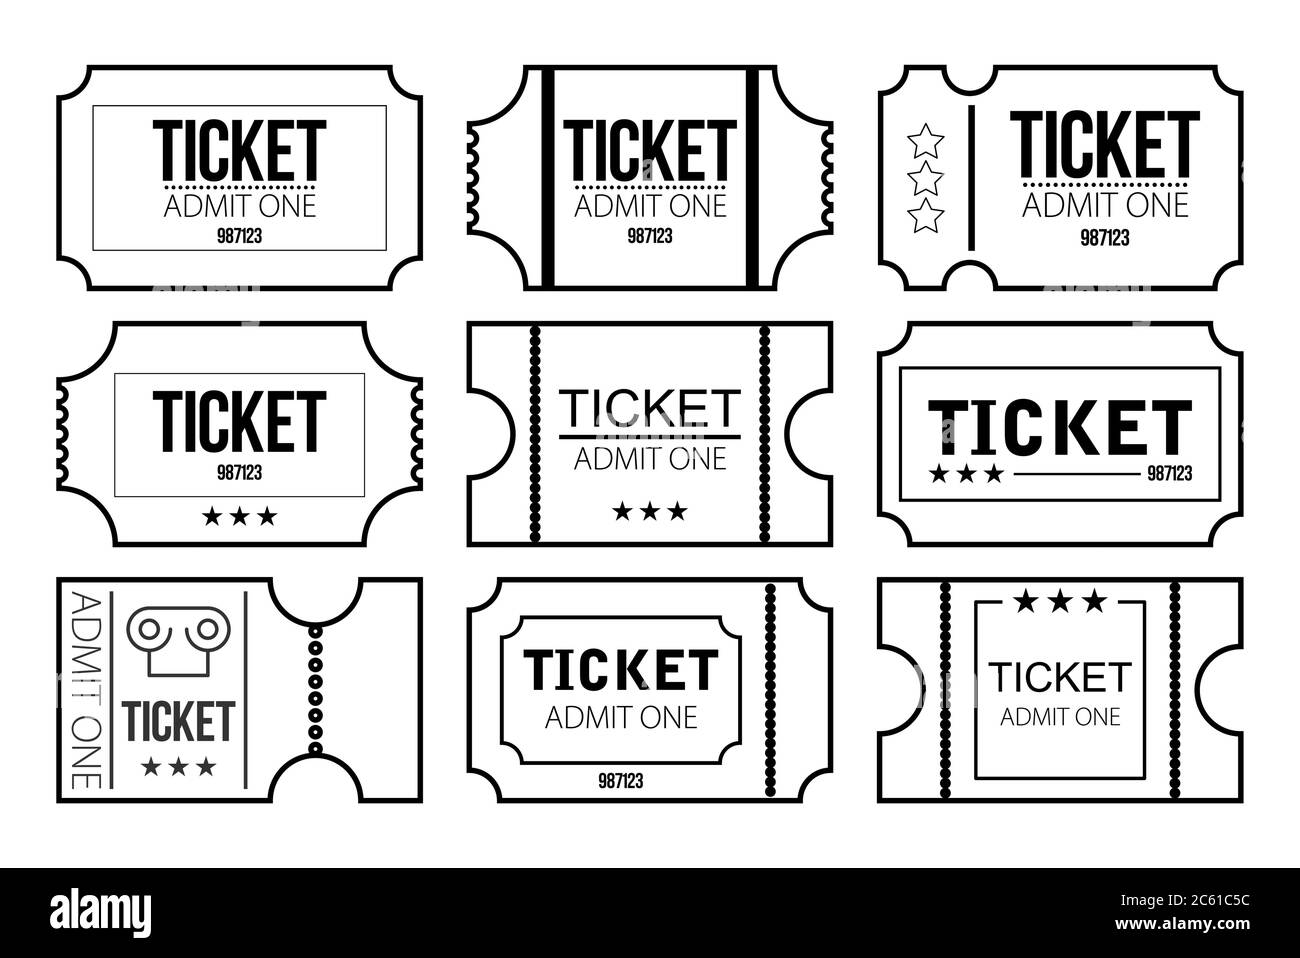 Ticket de. Тикет форма. Admit one. Ticket icon. Ticket illustration.